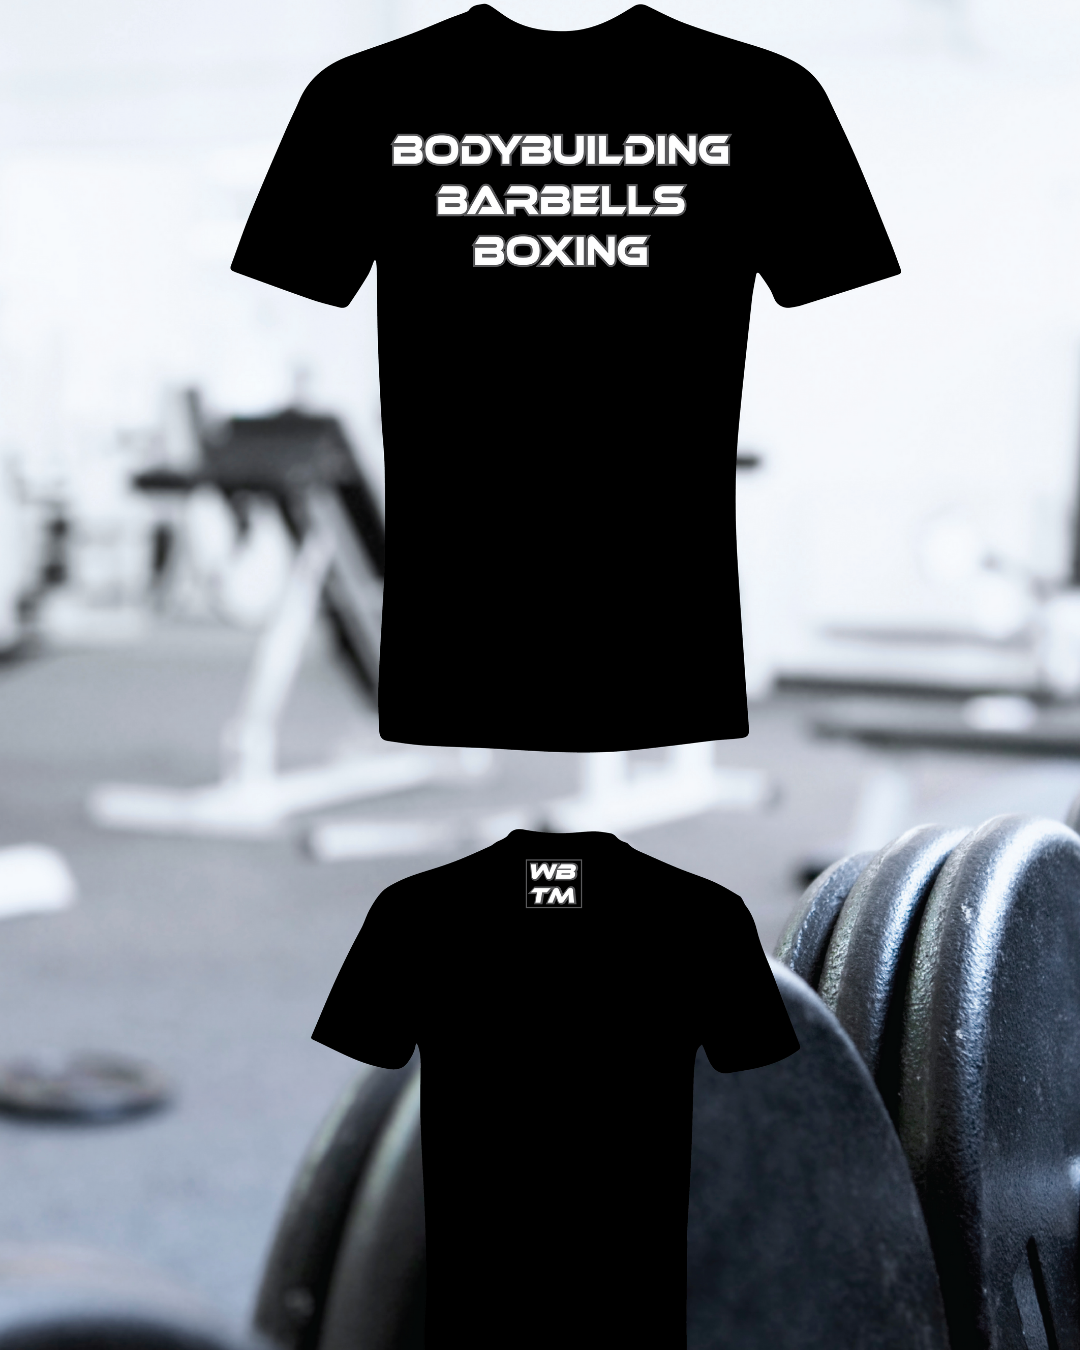 Portico Ordliste Rouse Bodybuilding, Barbells & Boxing T- Shirts – Water Buffalo Training Method